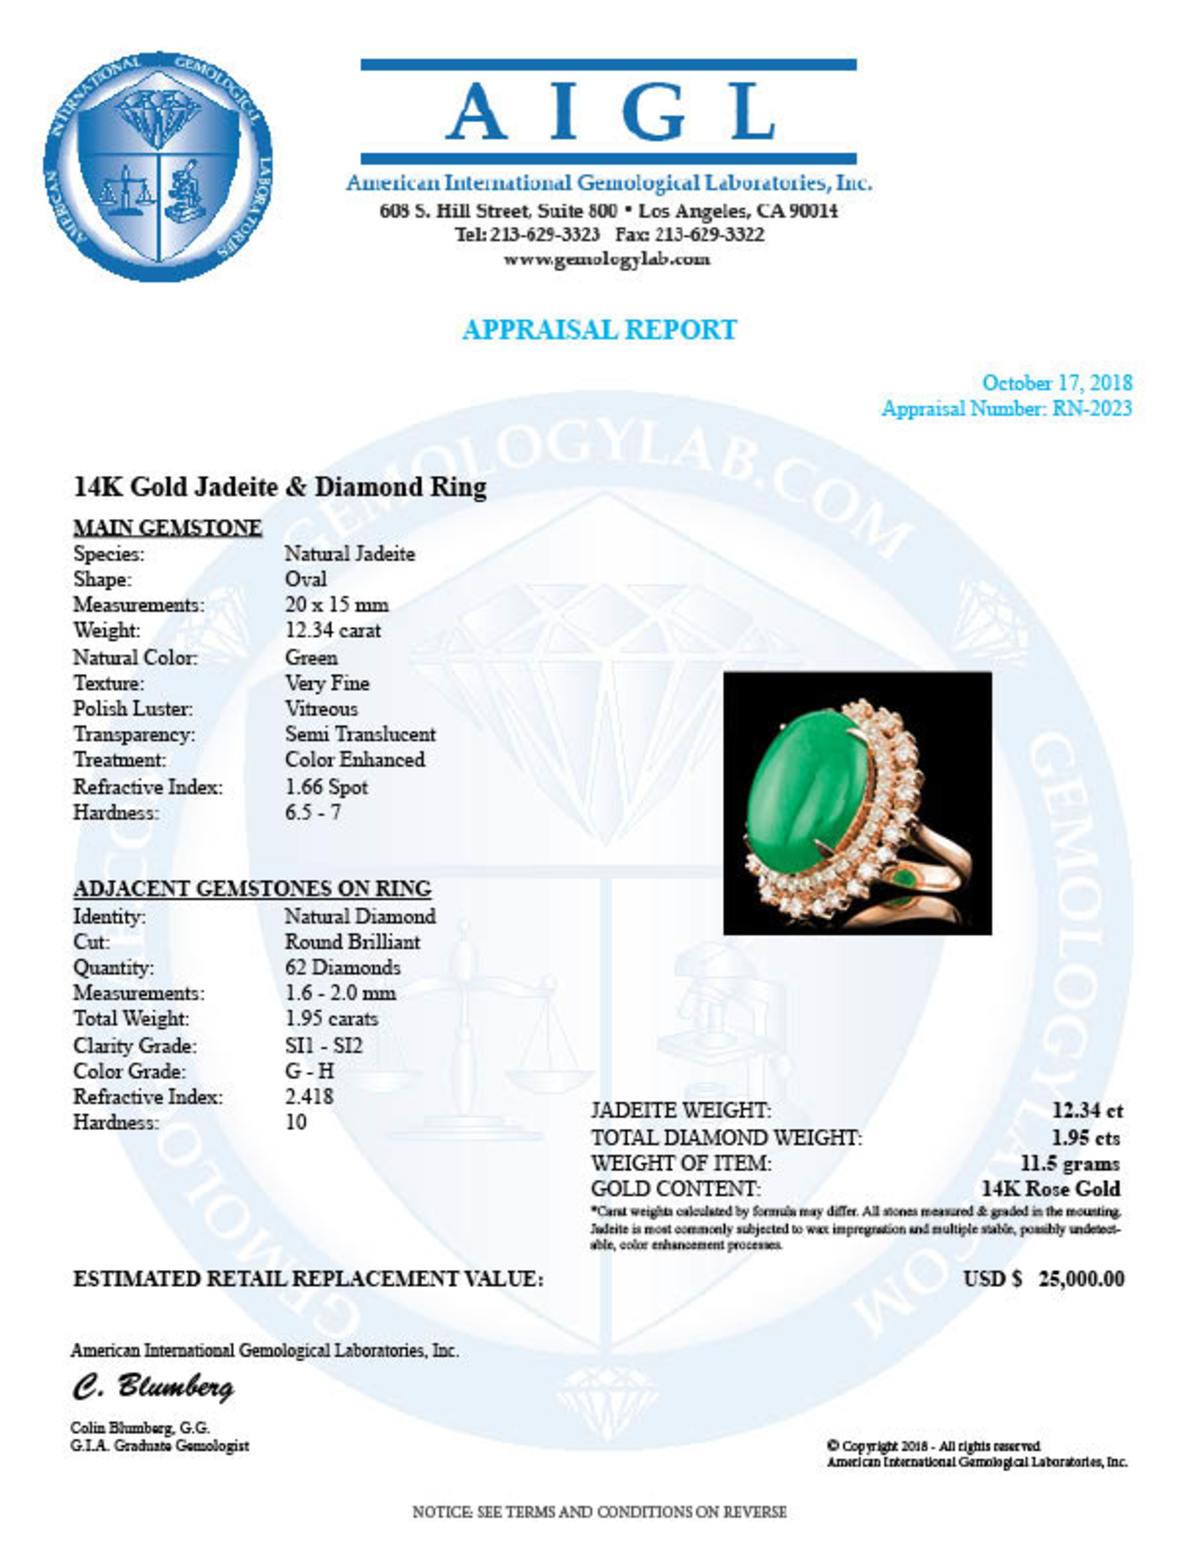 14K Rose Gold 12.34ct Natural Jadeite and 1.95ct Diamond Ring